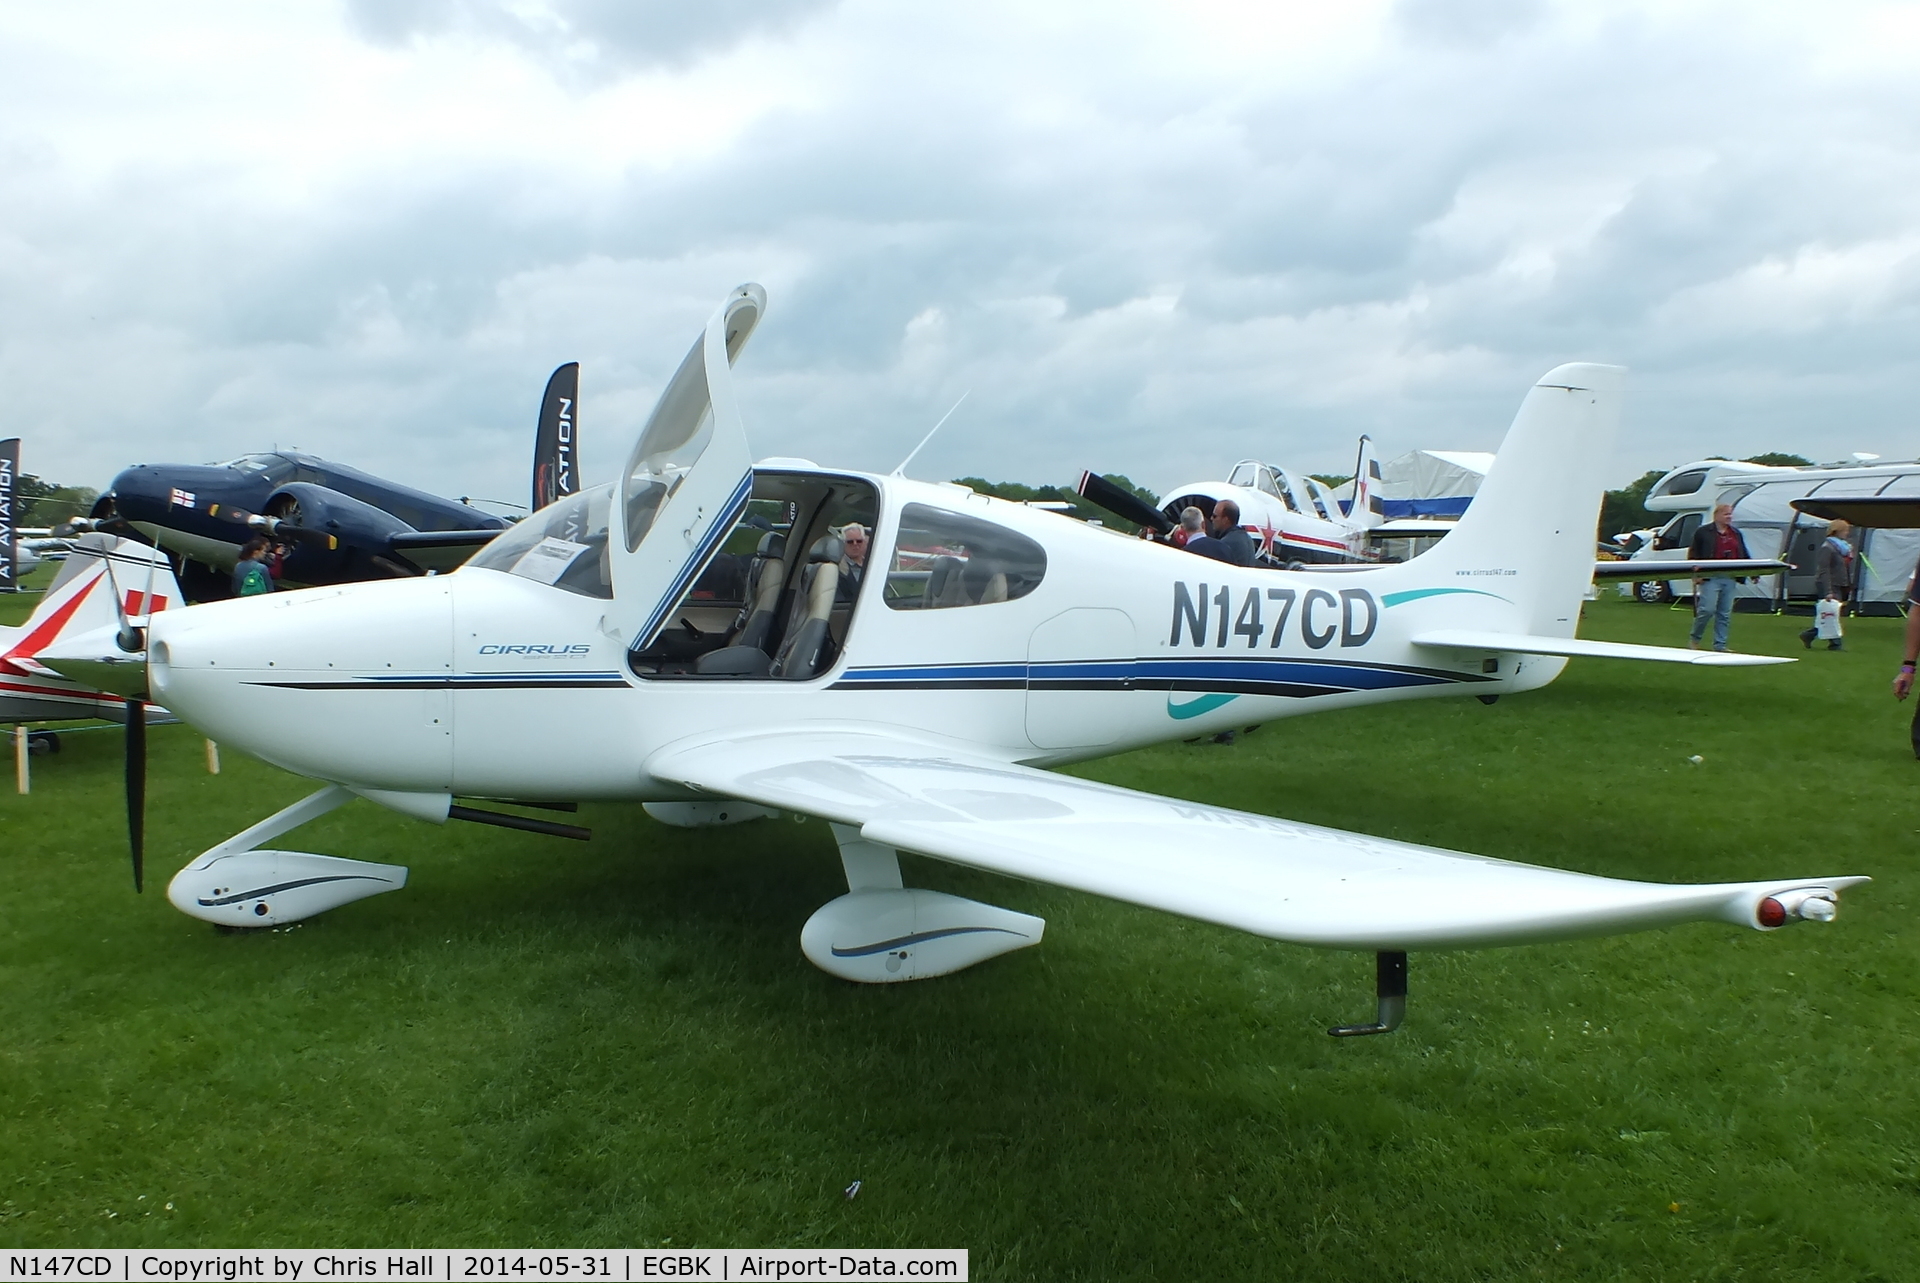 N147CD, 2000 Cirrus SR20 C/N 1043, at AeroExpo 2014